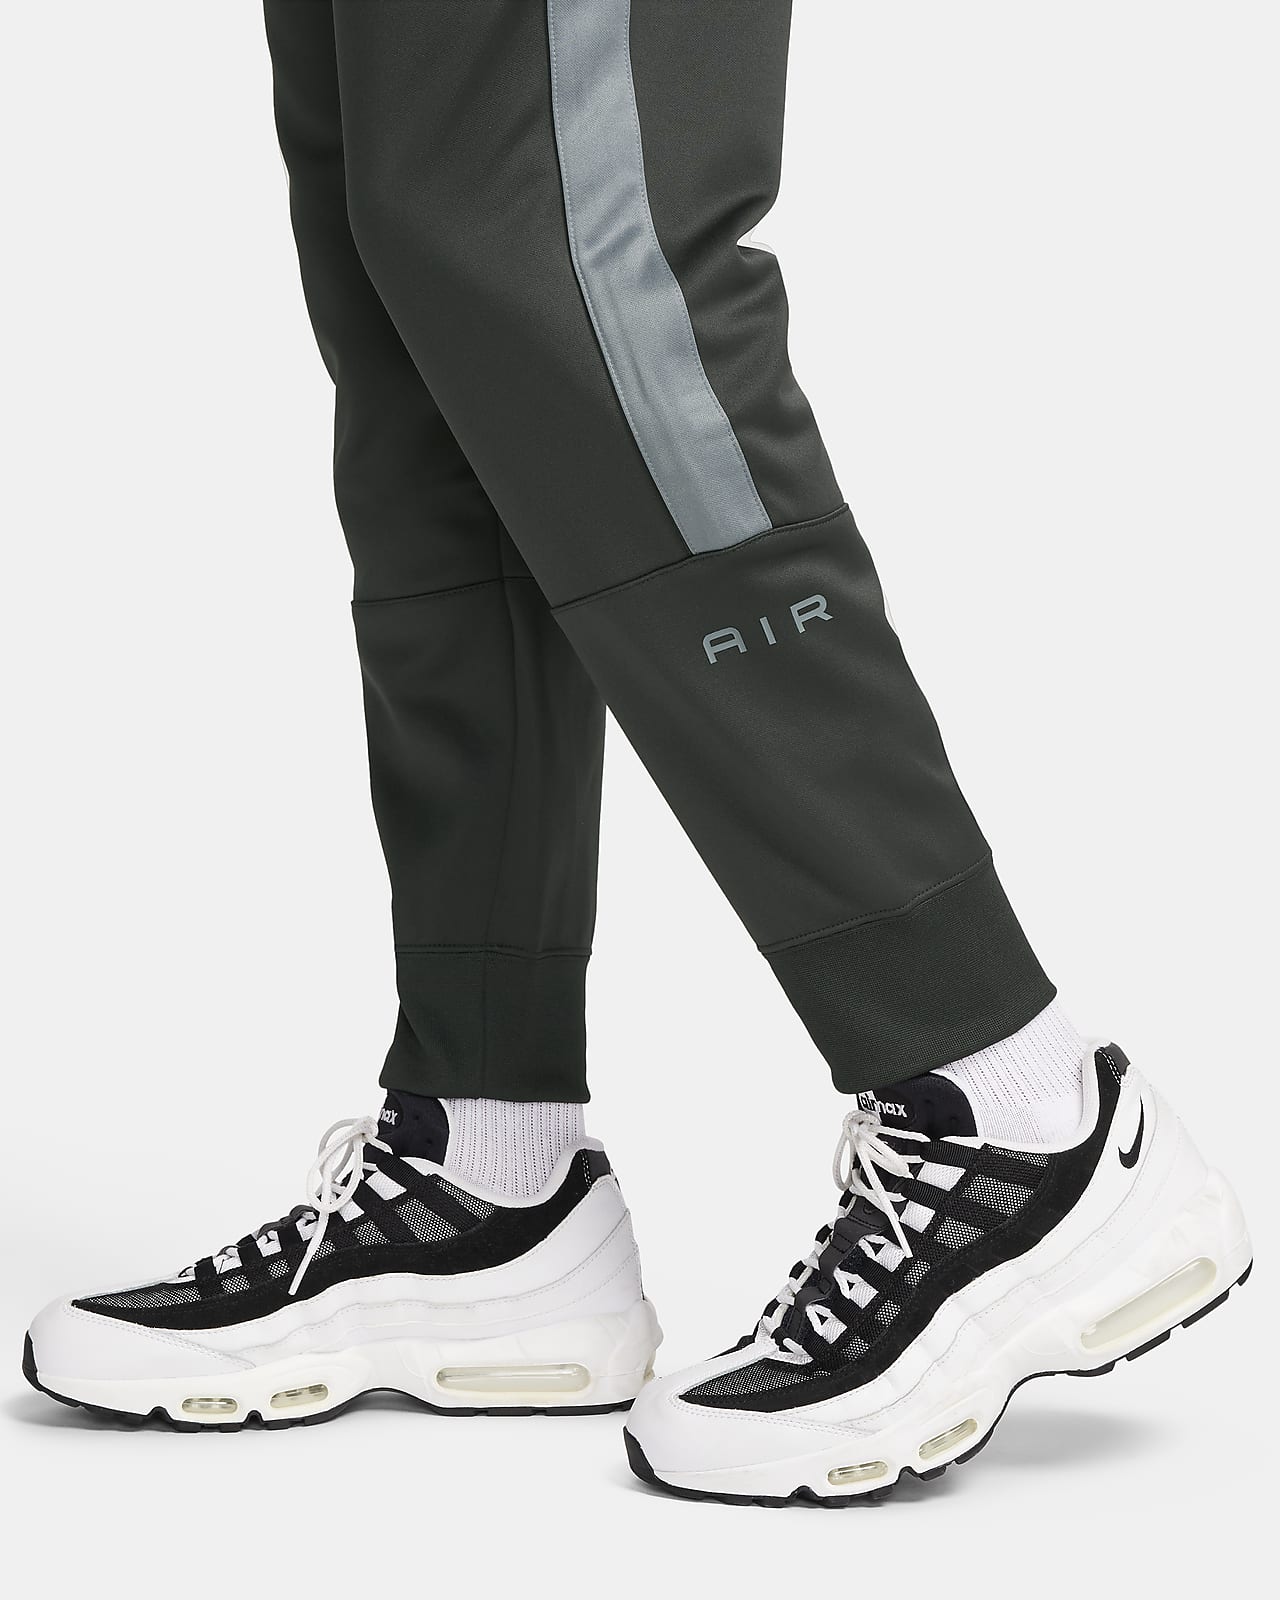 Black Don't Crack Slim-Fit Military Green, Grey/Black Jogger Pant – Black  Don't Crack®